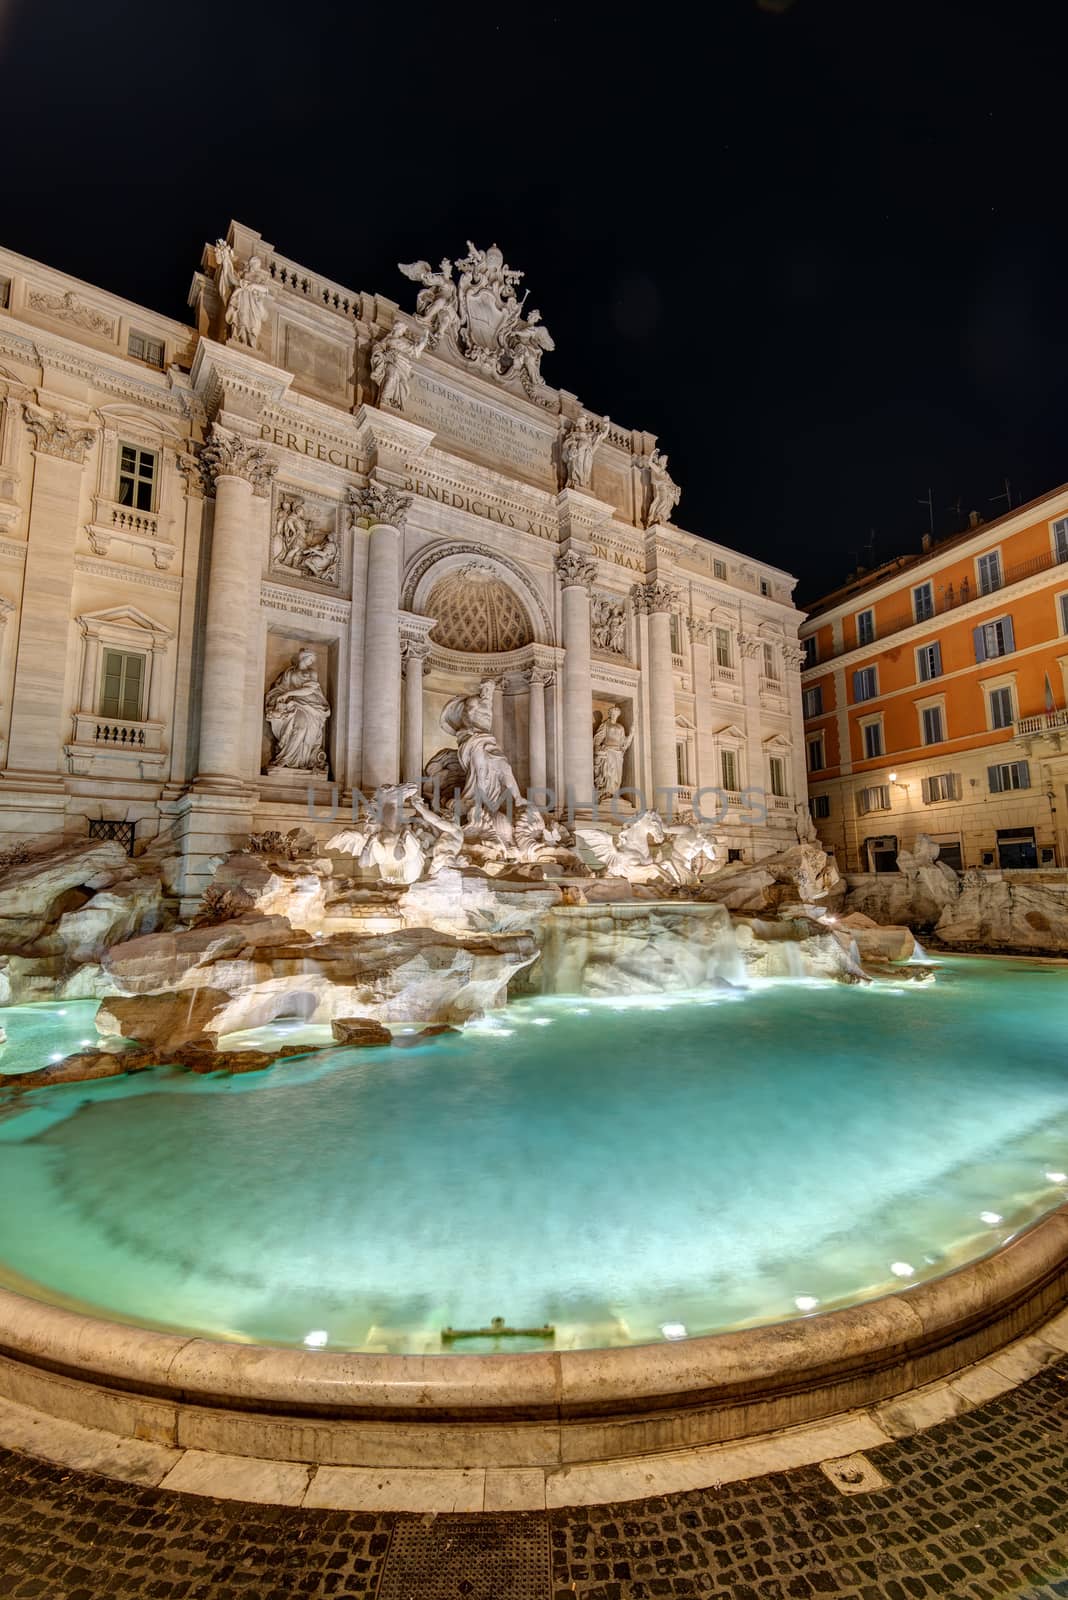 The famous Fontana di Trevi in Rome by elxeneize